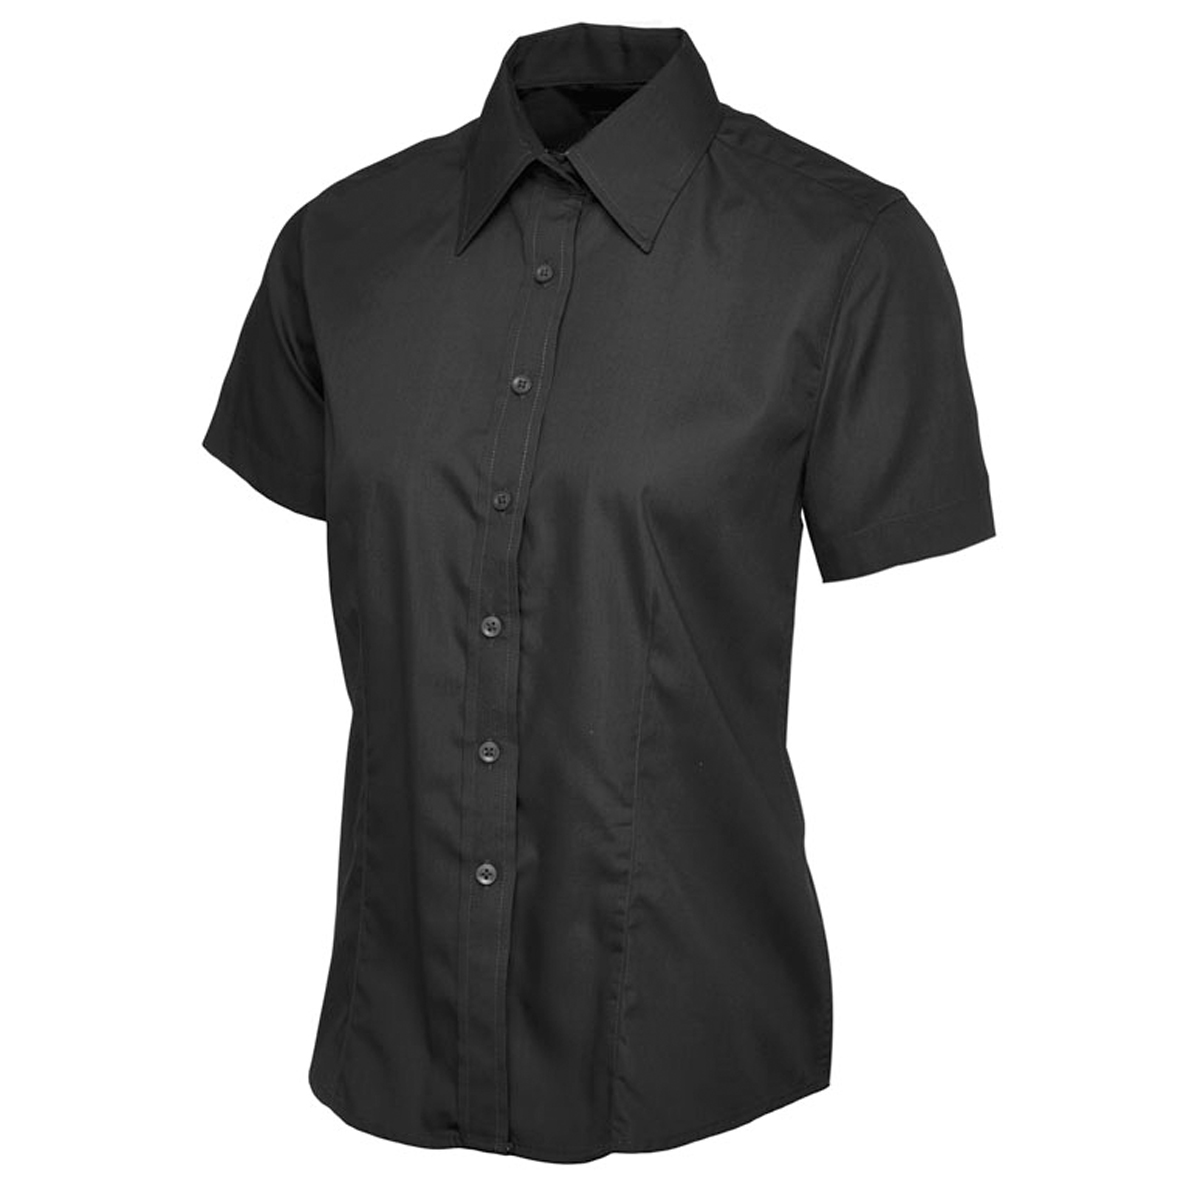 Uc712 - black - m - ladies poplin short sleeve shirt